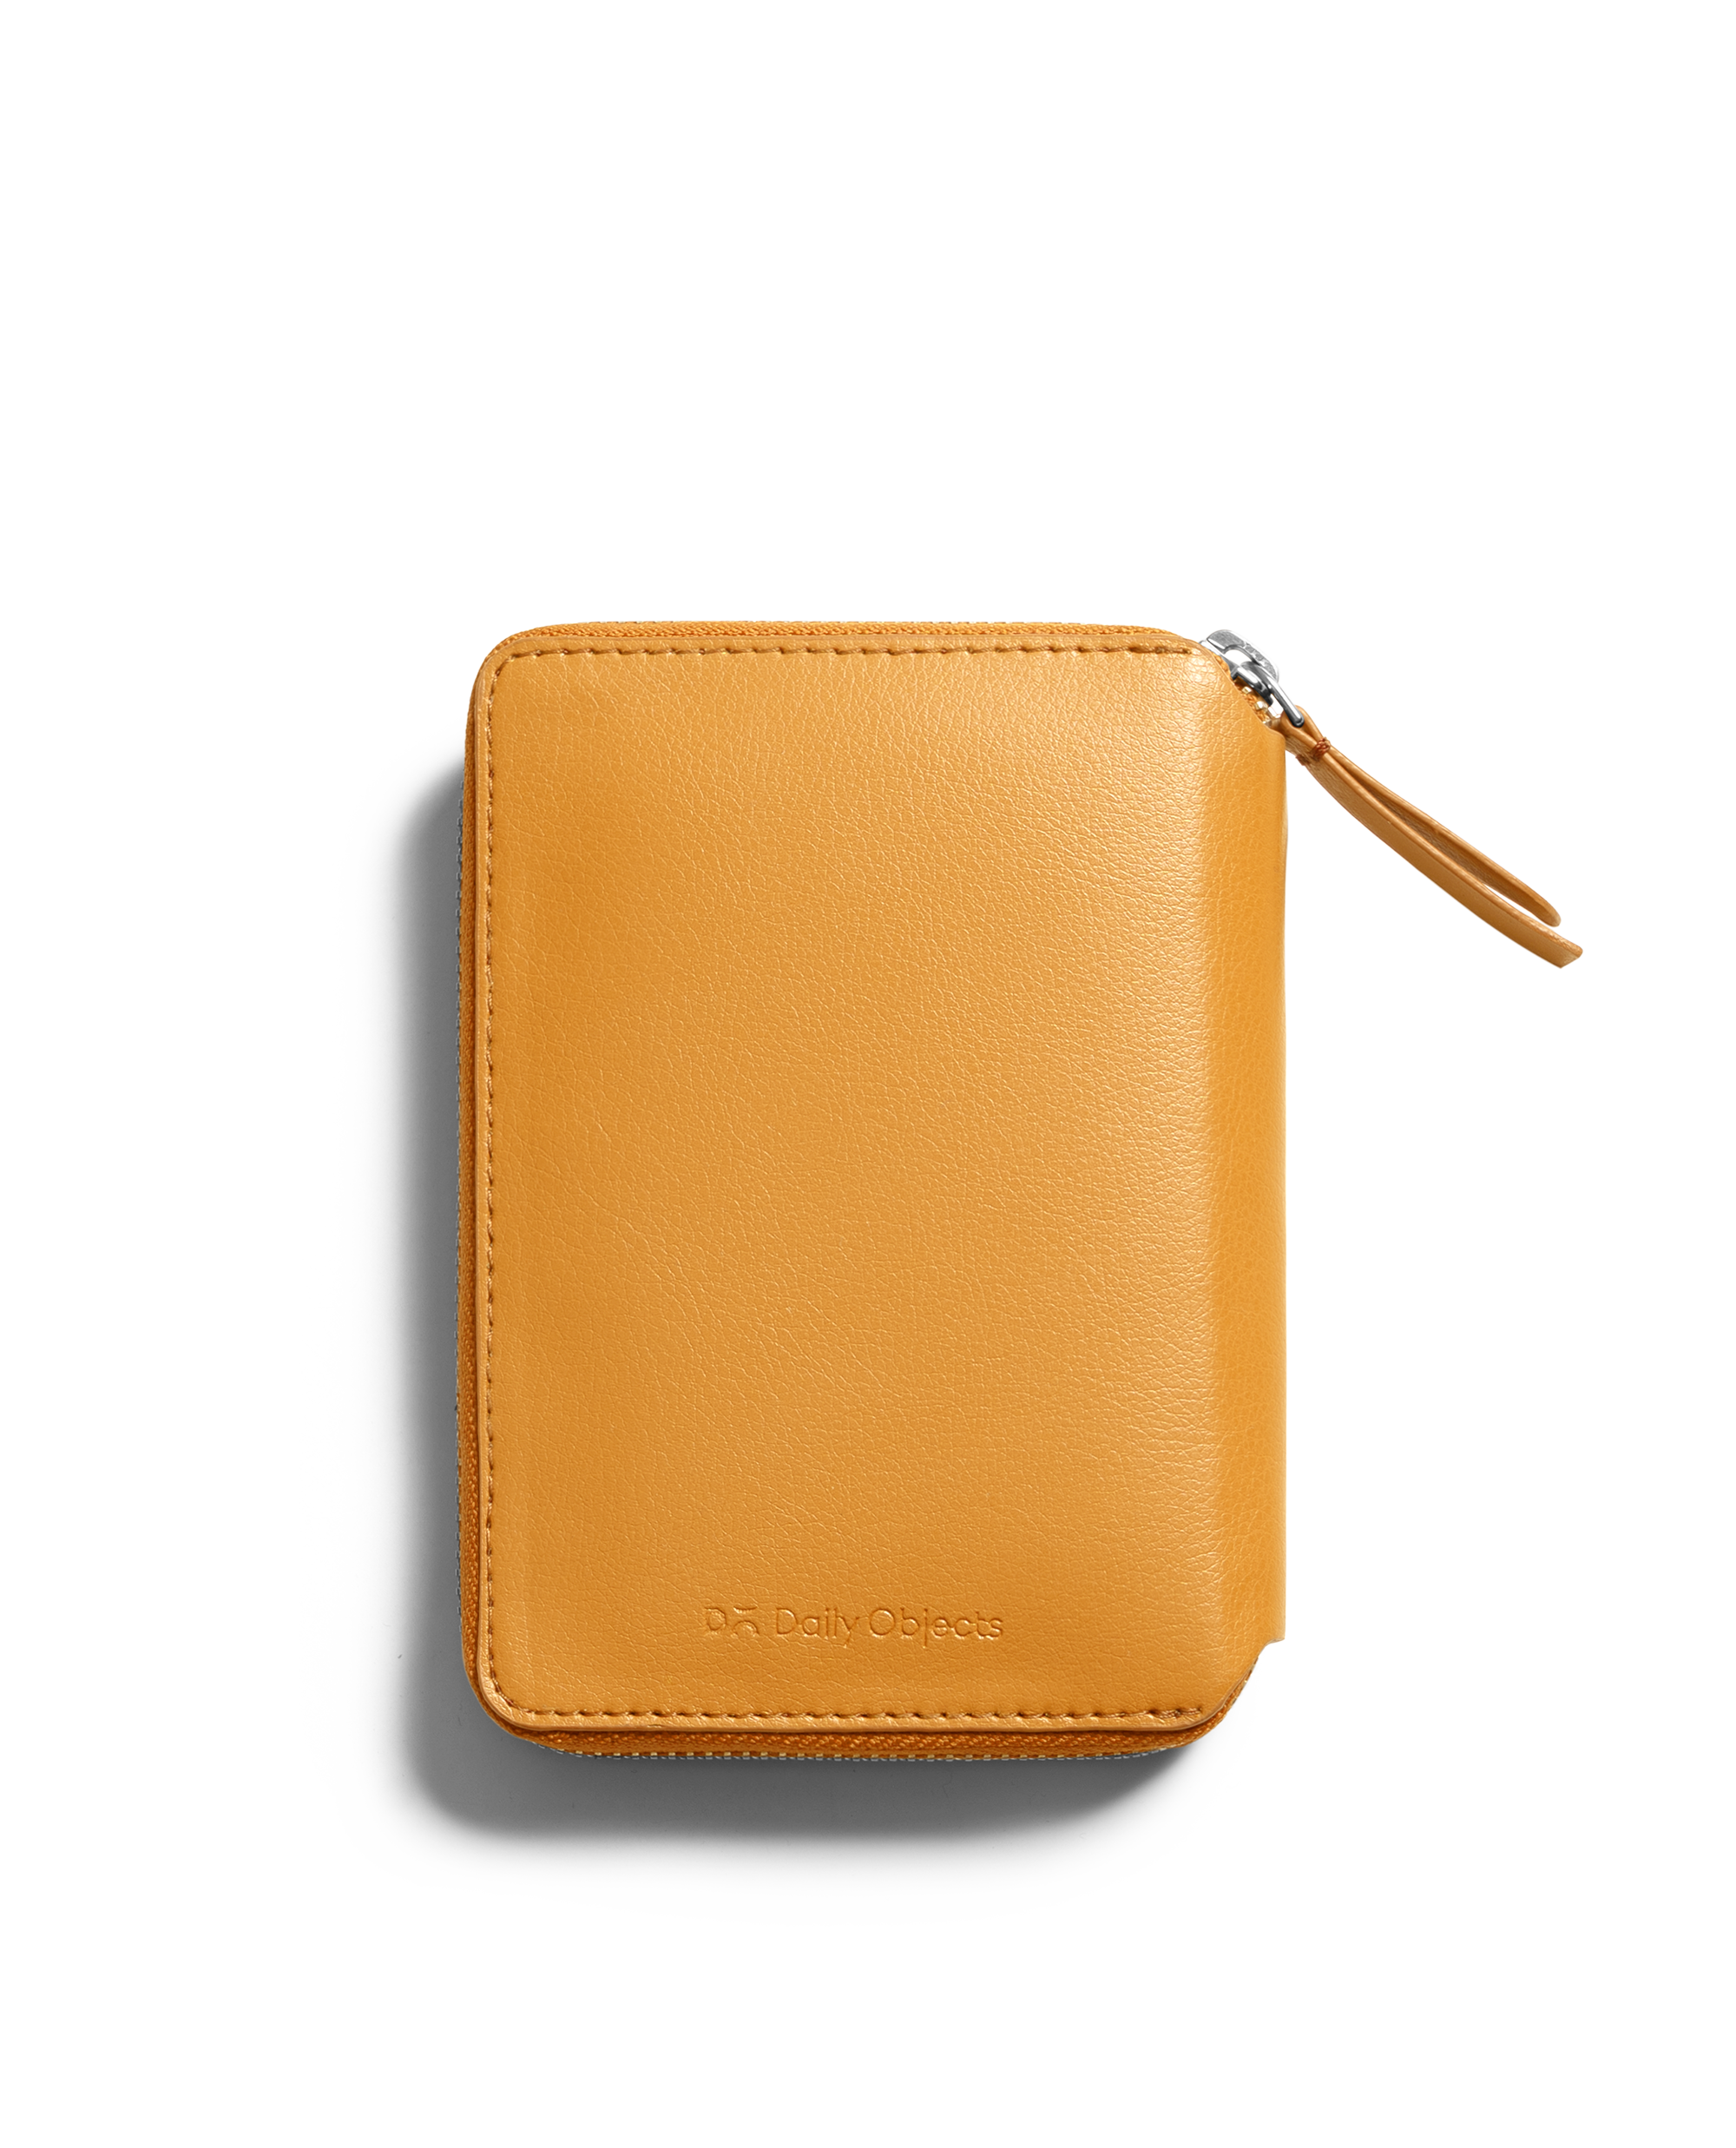 Buy BOSTANTEN Genuine Leather Hobo Handbags Designer Shoulder Tote Purses  Crossbody Large Bag for Women, Beige With Yellow, medium (L)14.57